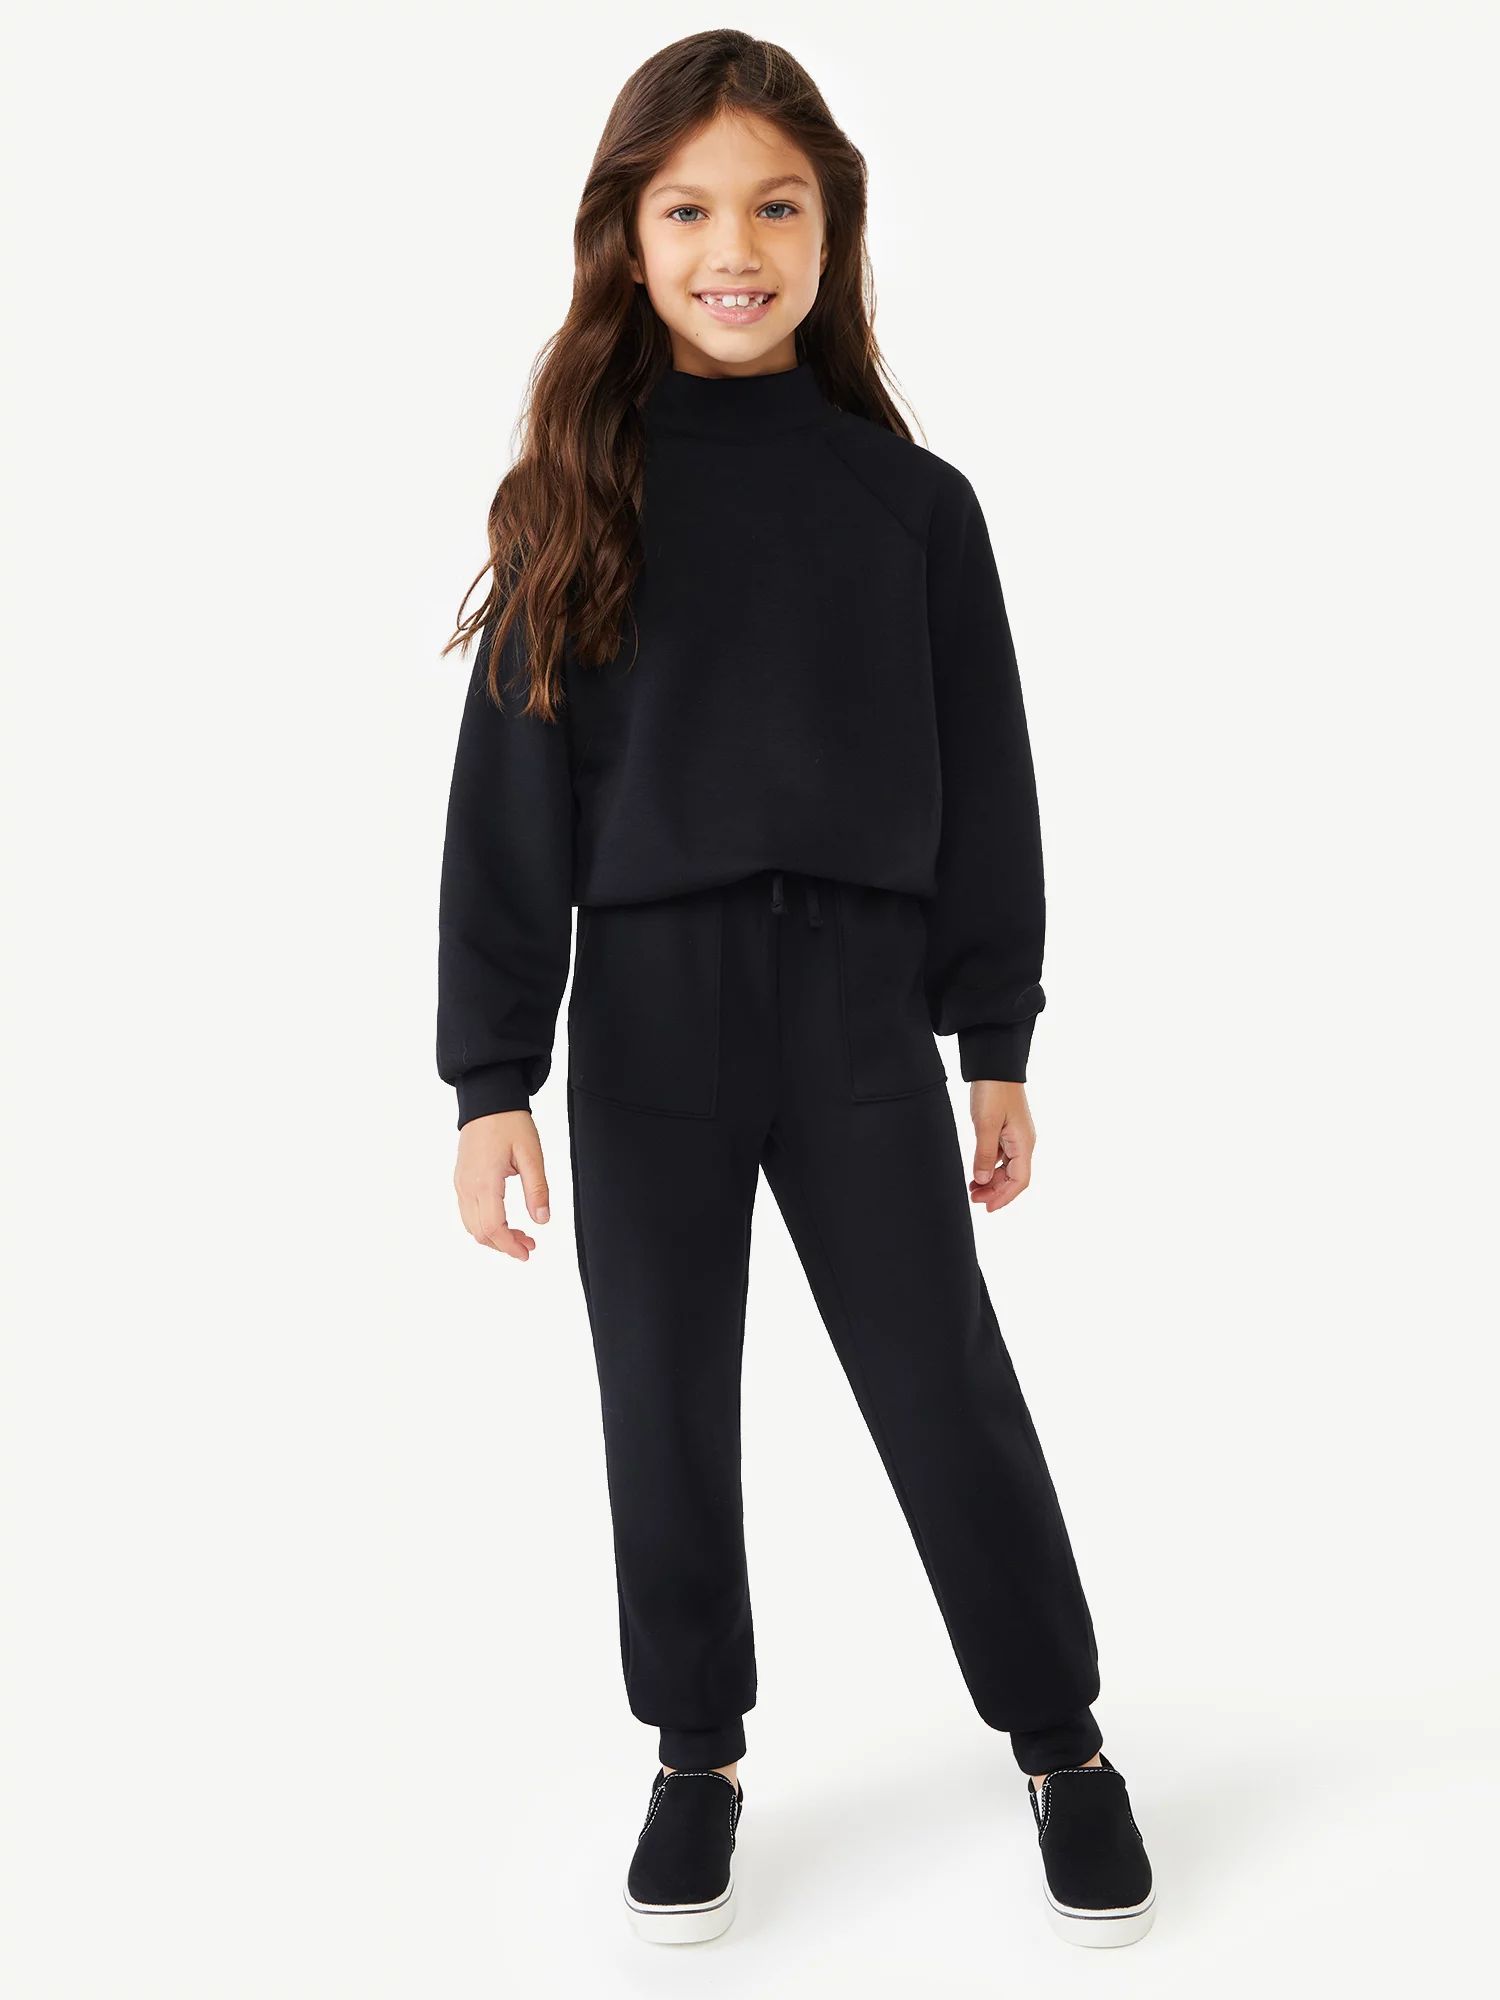 Scoop Girls Funnel Neck Sweatshirt and Joggers, 2-Piece Outfit Set - Walmart.com | Walmart (US)